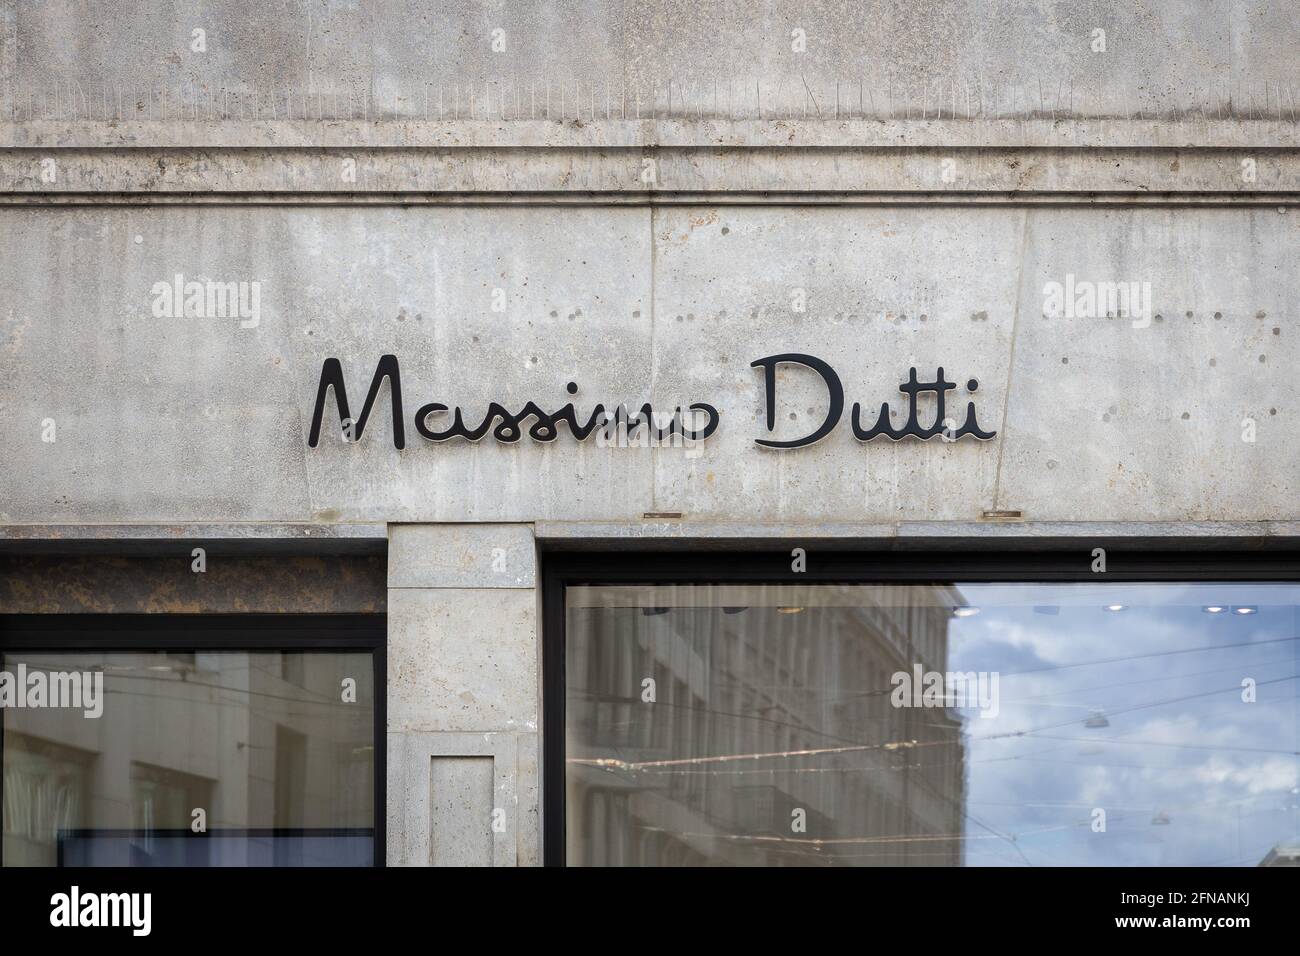 Massimo Dutti store sign in Munich town center Stock Photo - Alamy